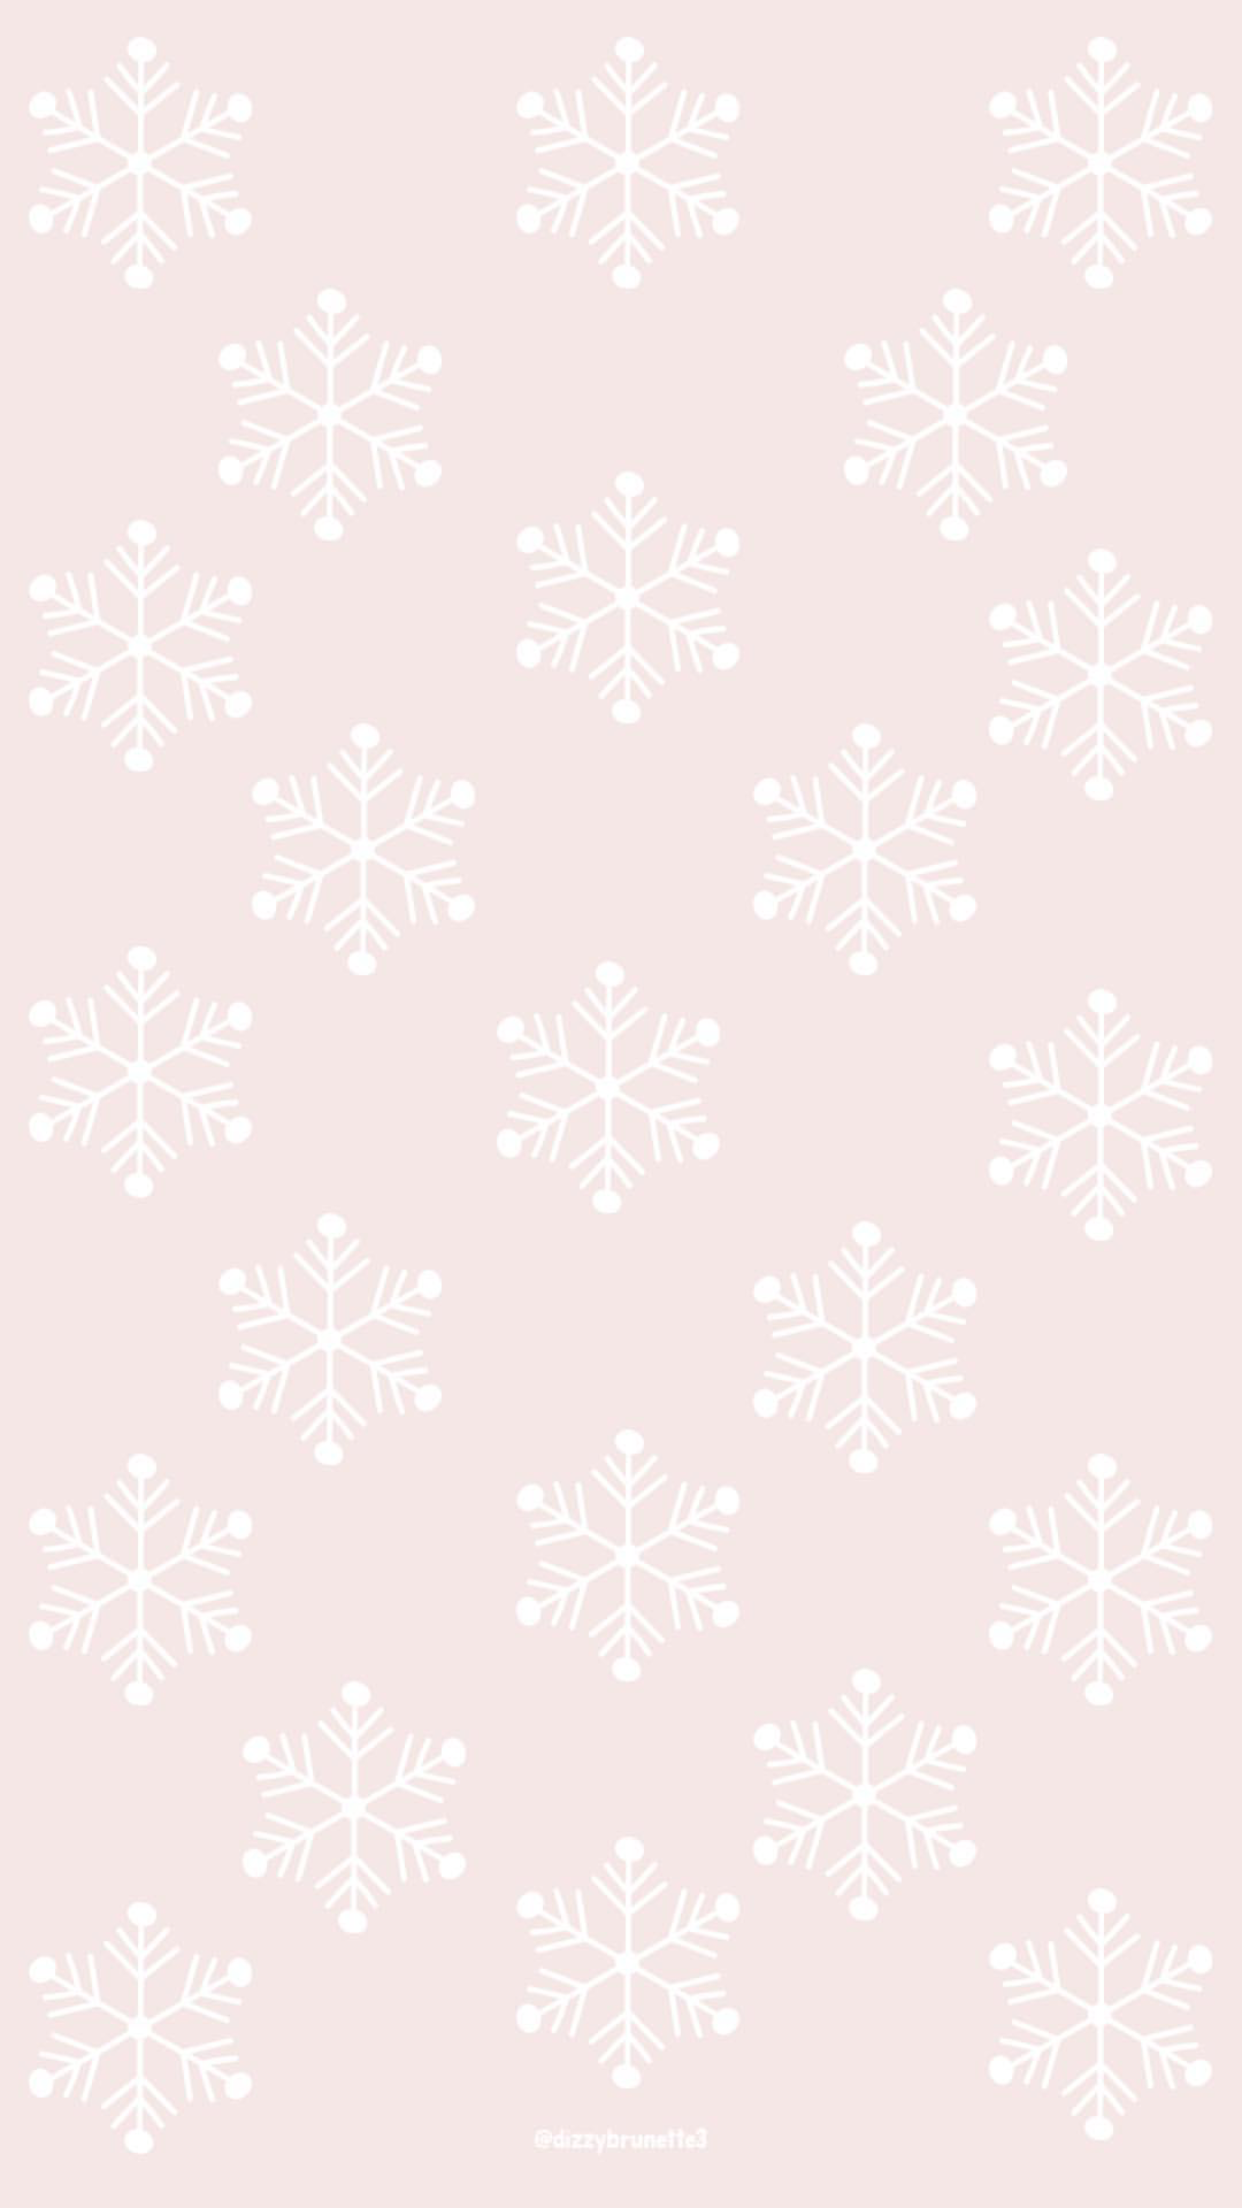 pattern #snowflakes #winter. Wallpaper iphone christmas, Christmas phone wallpaper, Cute christmas wallpaper